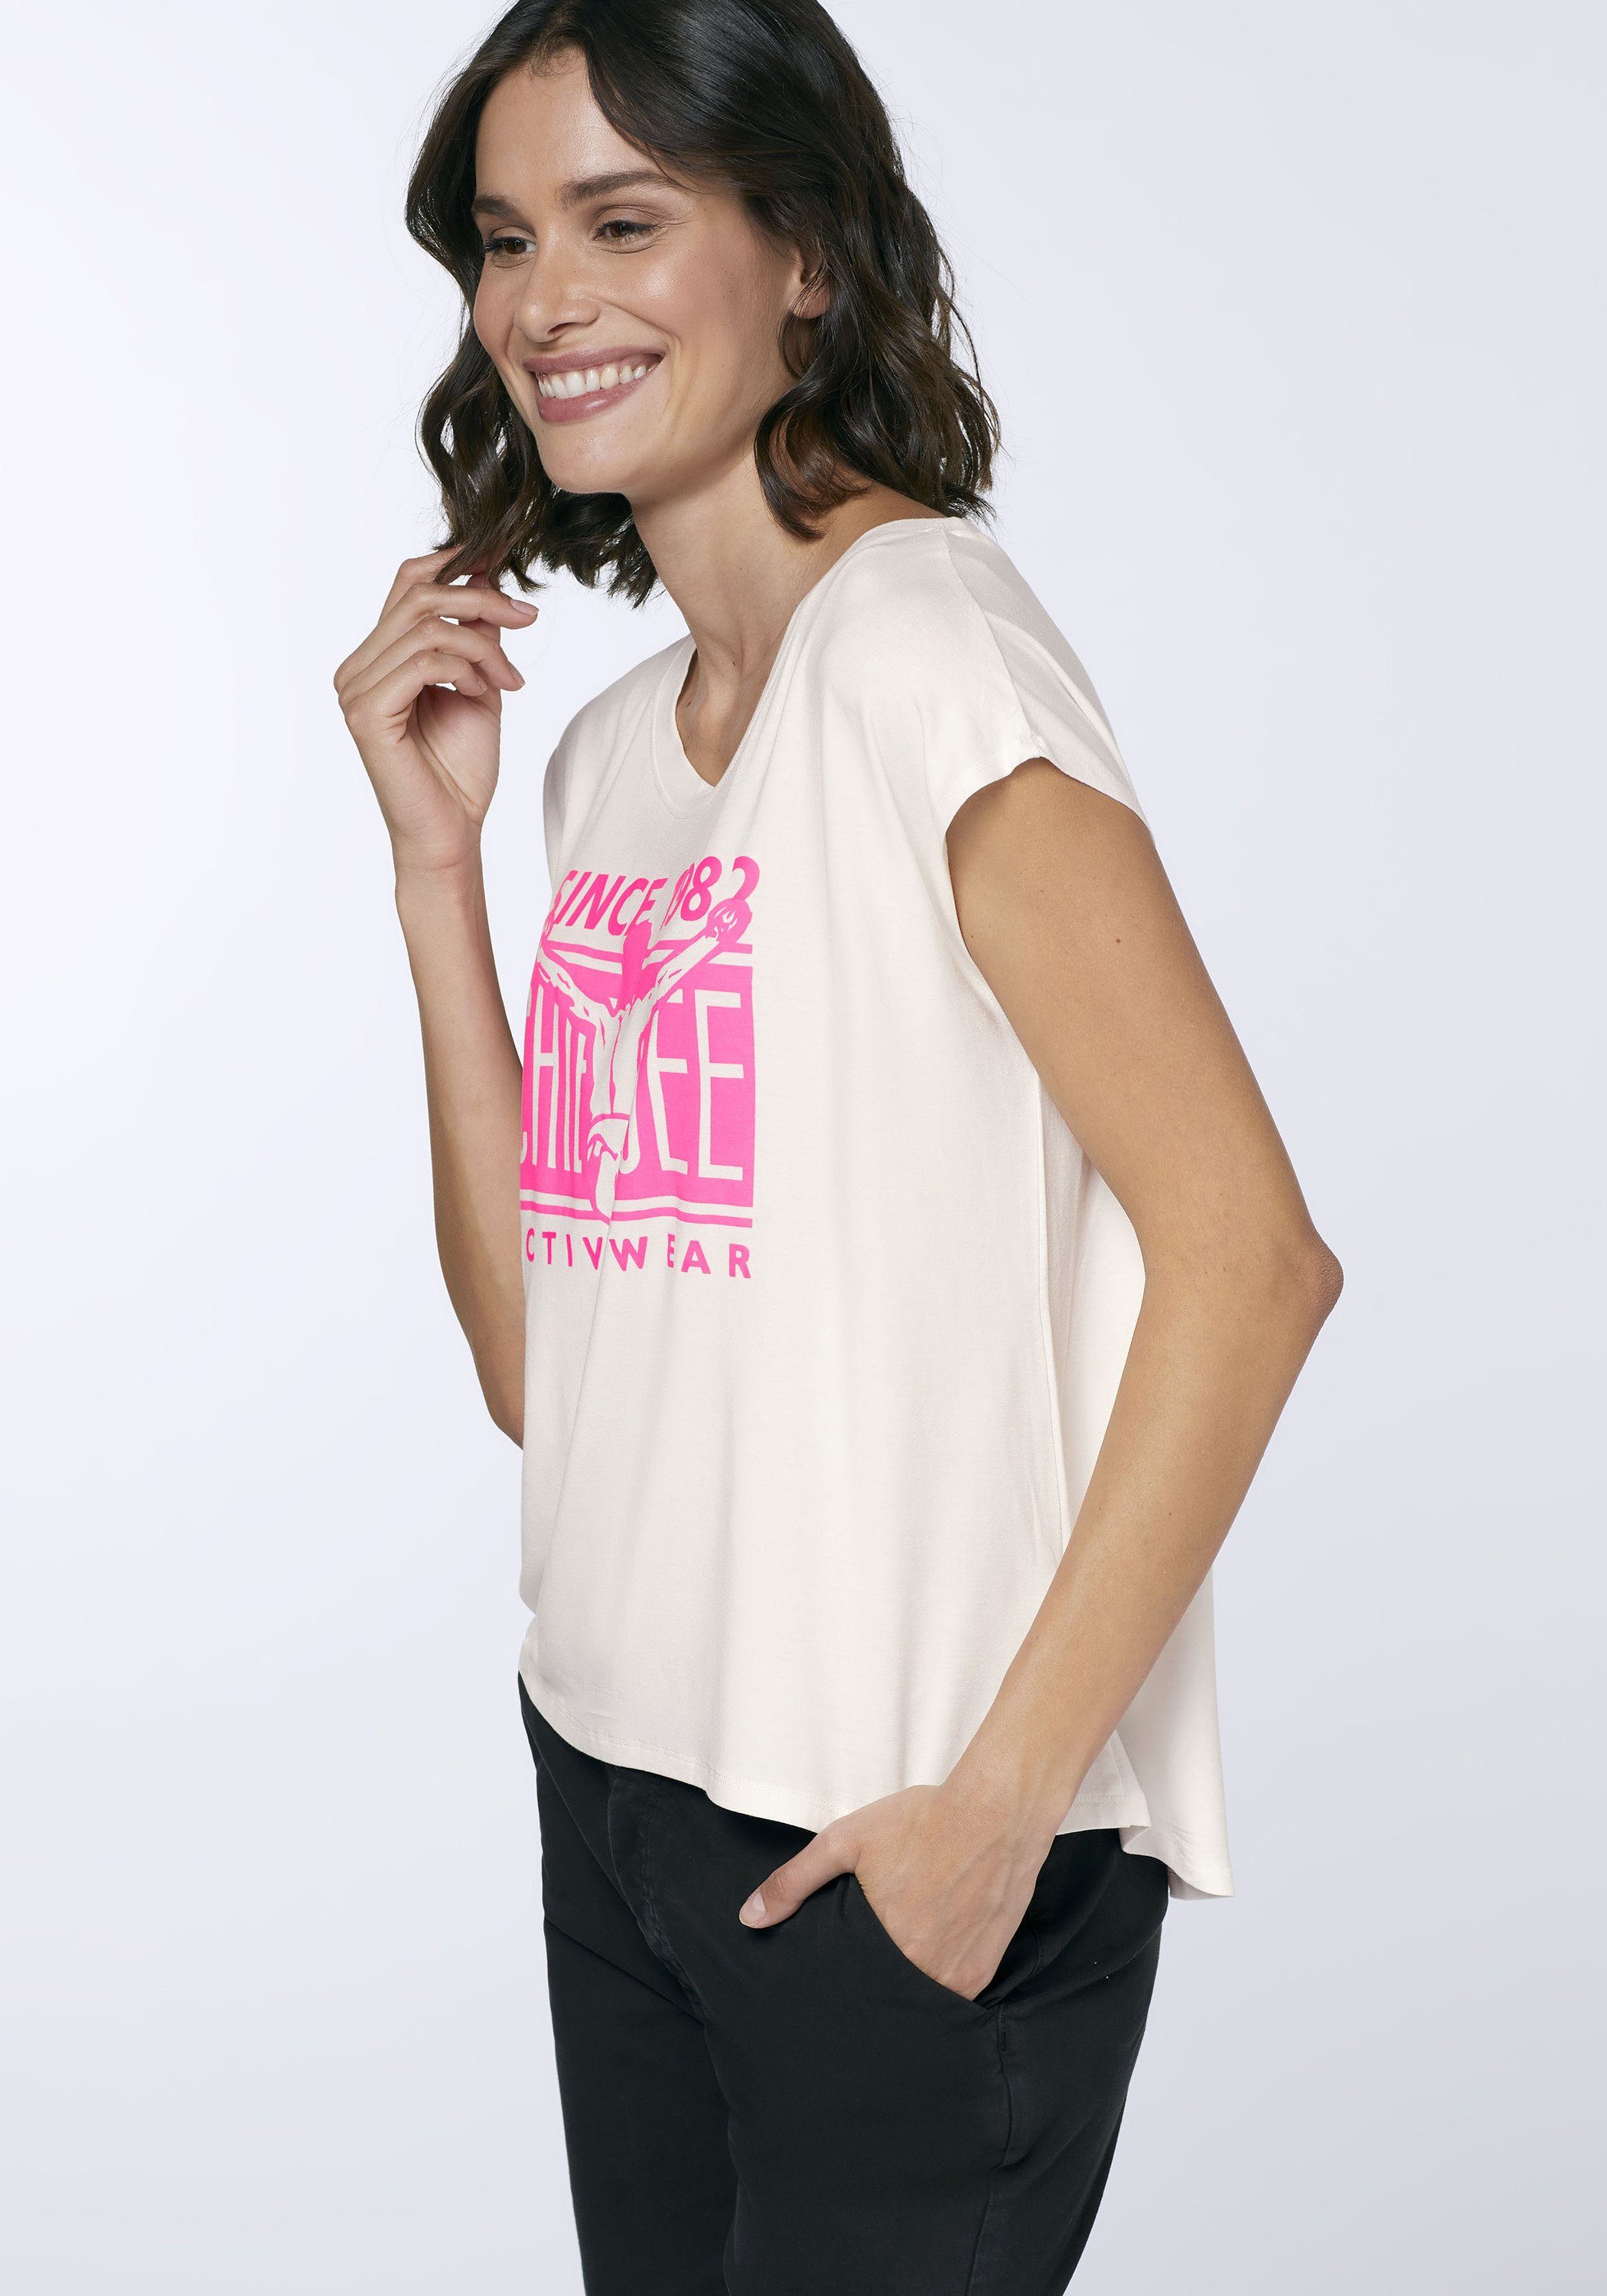 Star Print-Shirt aus Viskose-Elasthanmix mit Labelprint 1 Chiemsee White T-Shirt